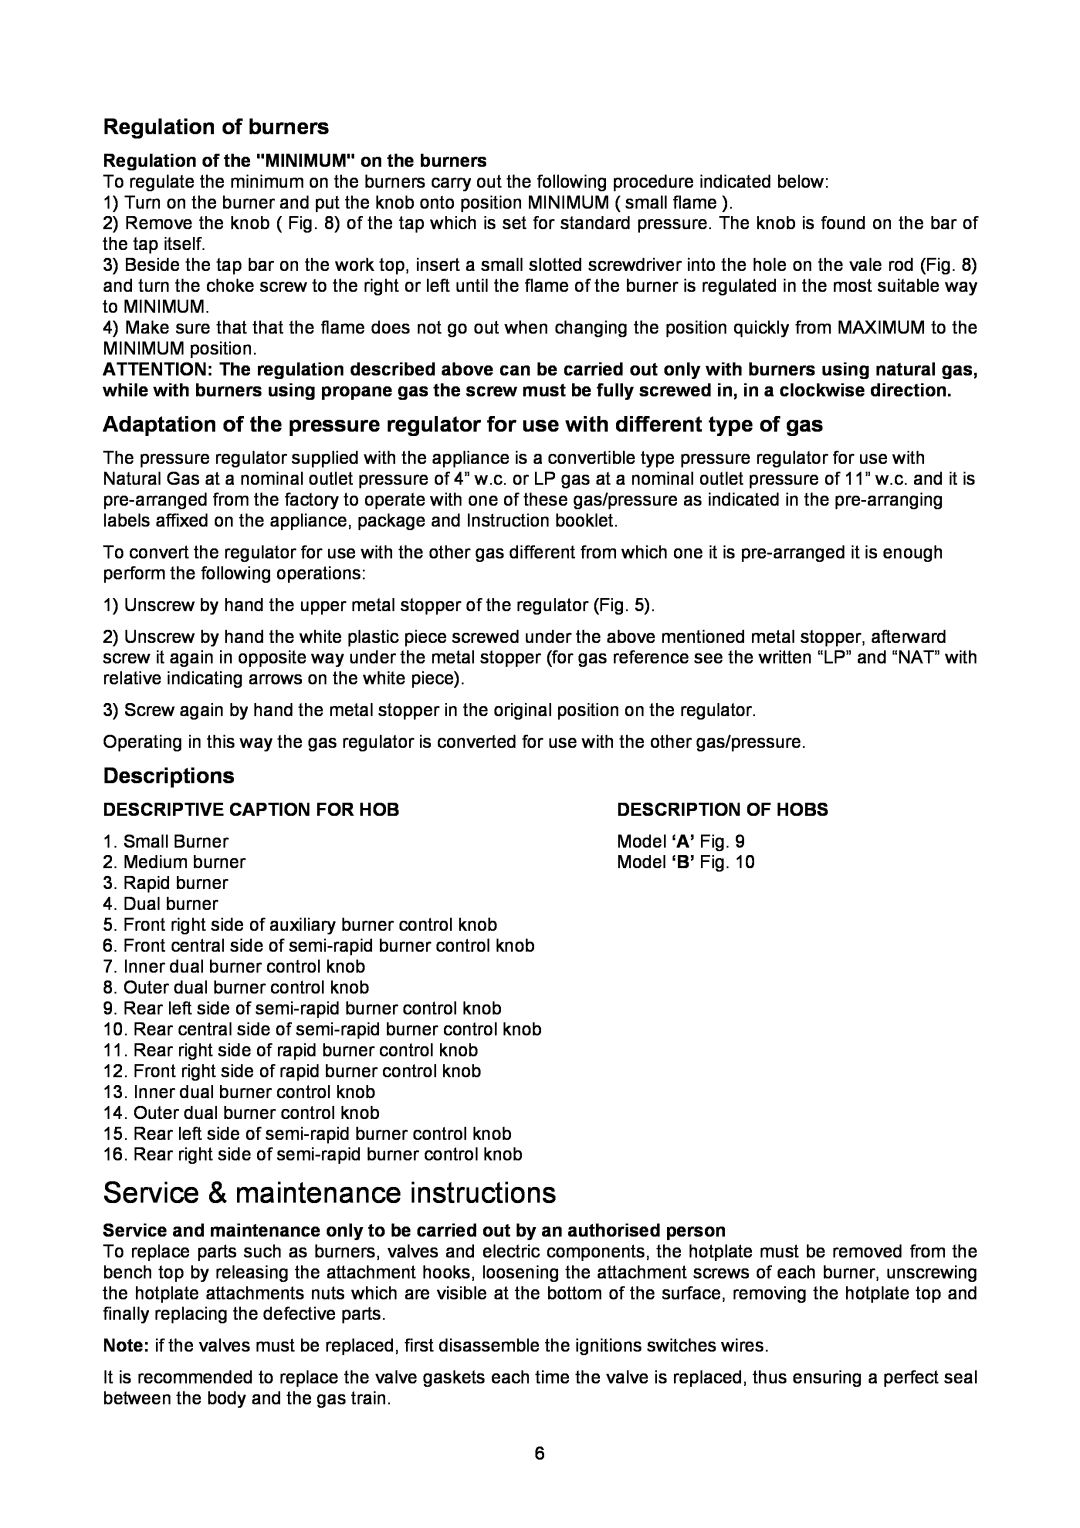 Bertazzoni B3Y0..U4X(2 OR 5)D, B3W0..U4X(2 OR 5)D Service & maintenance instructions, Regulation of burners, Descriptions 